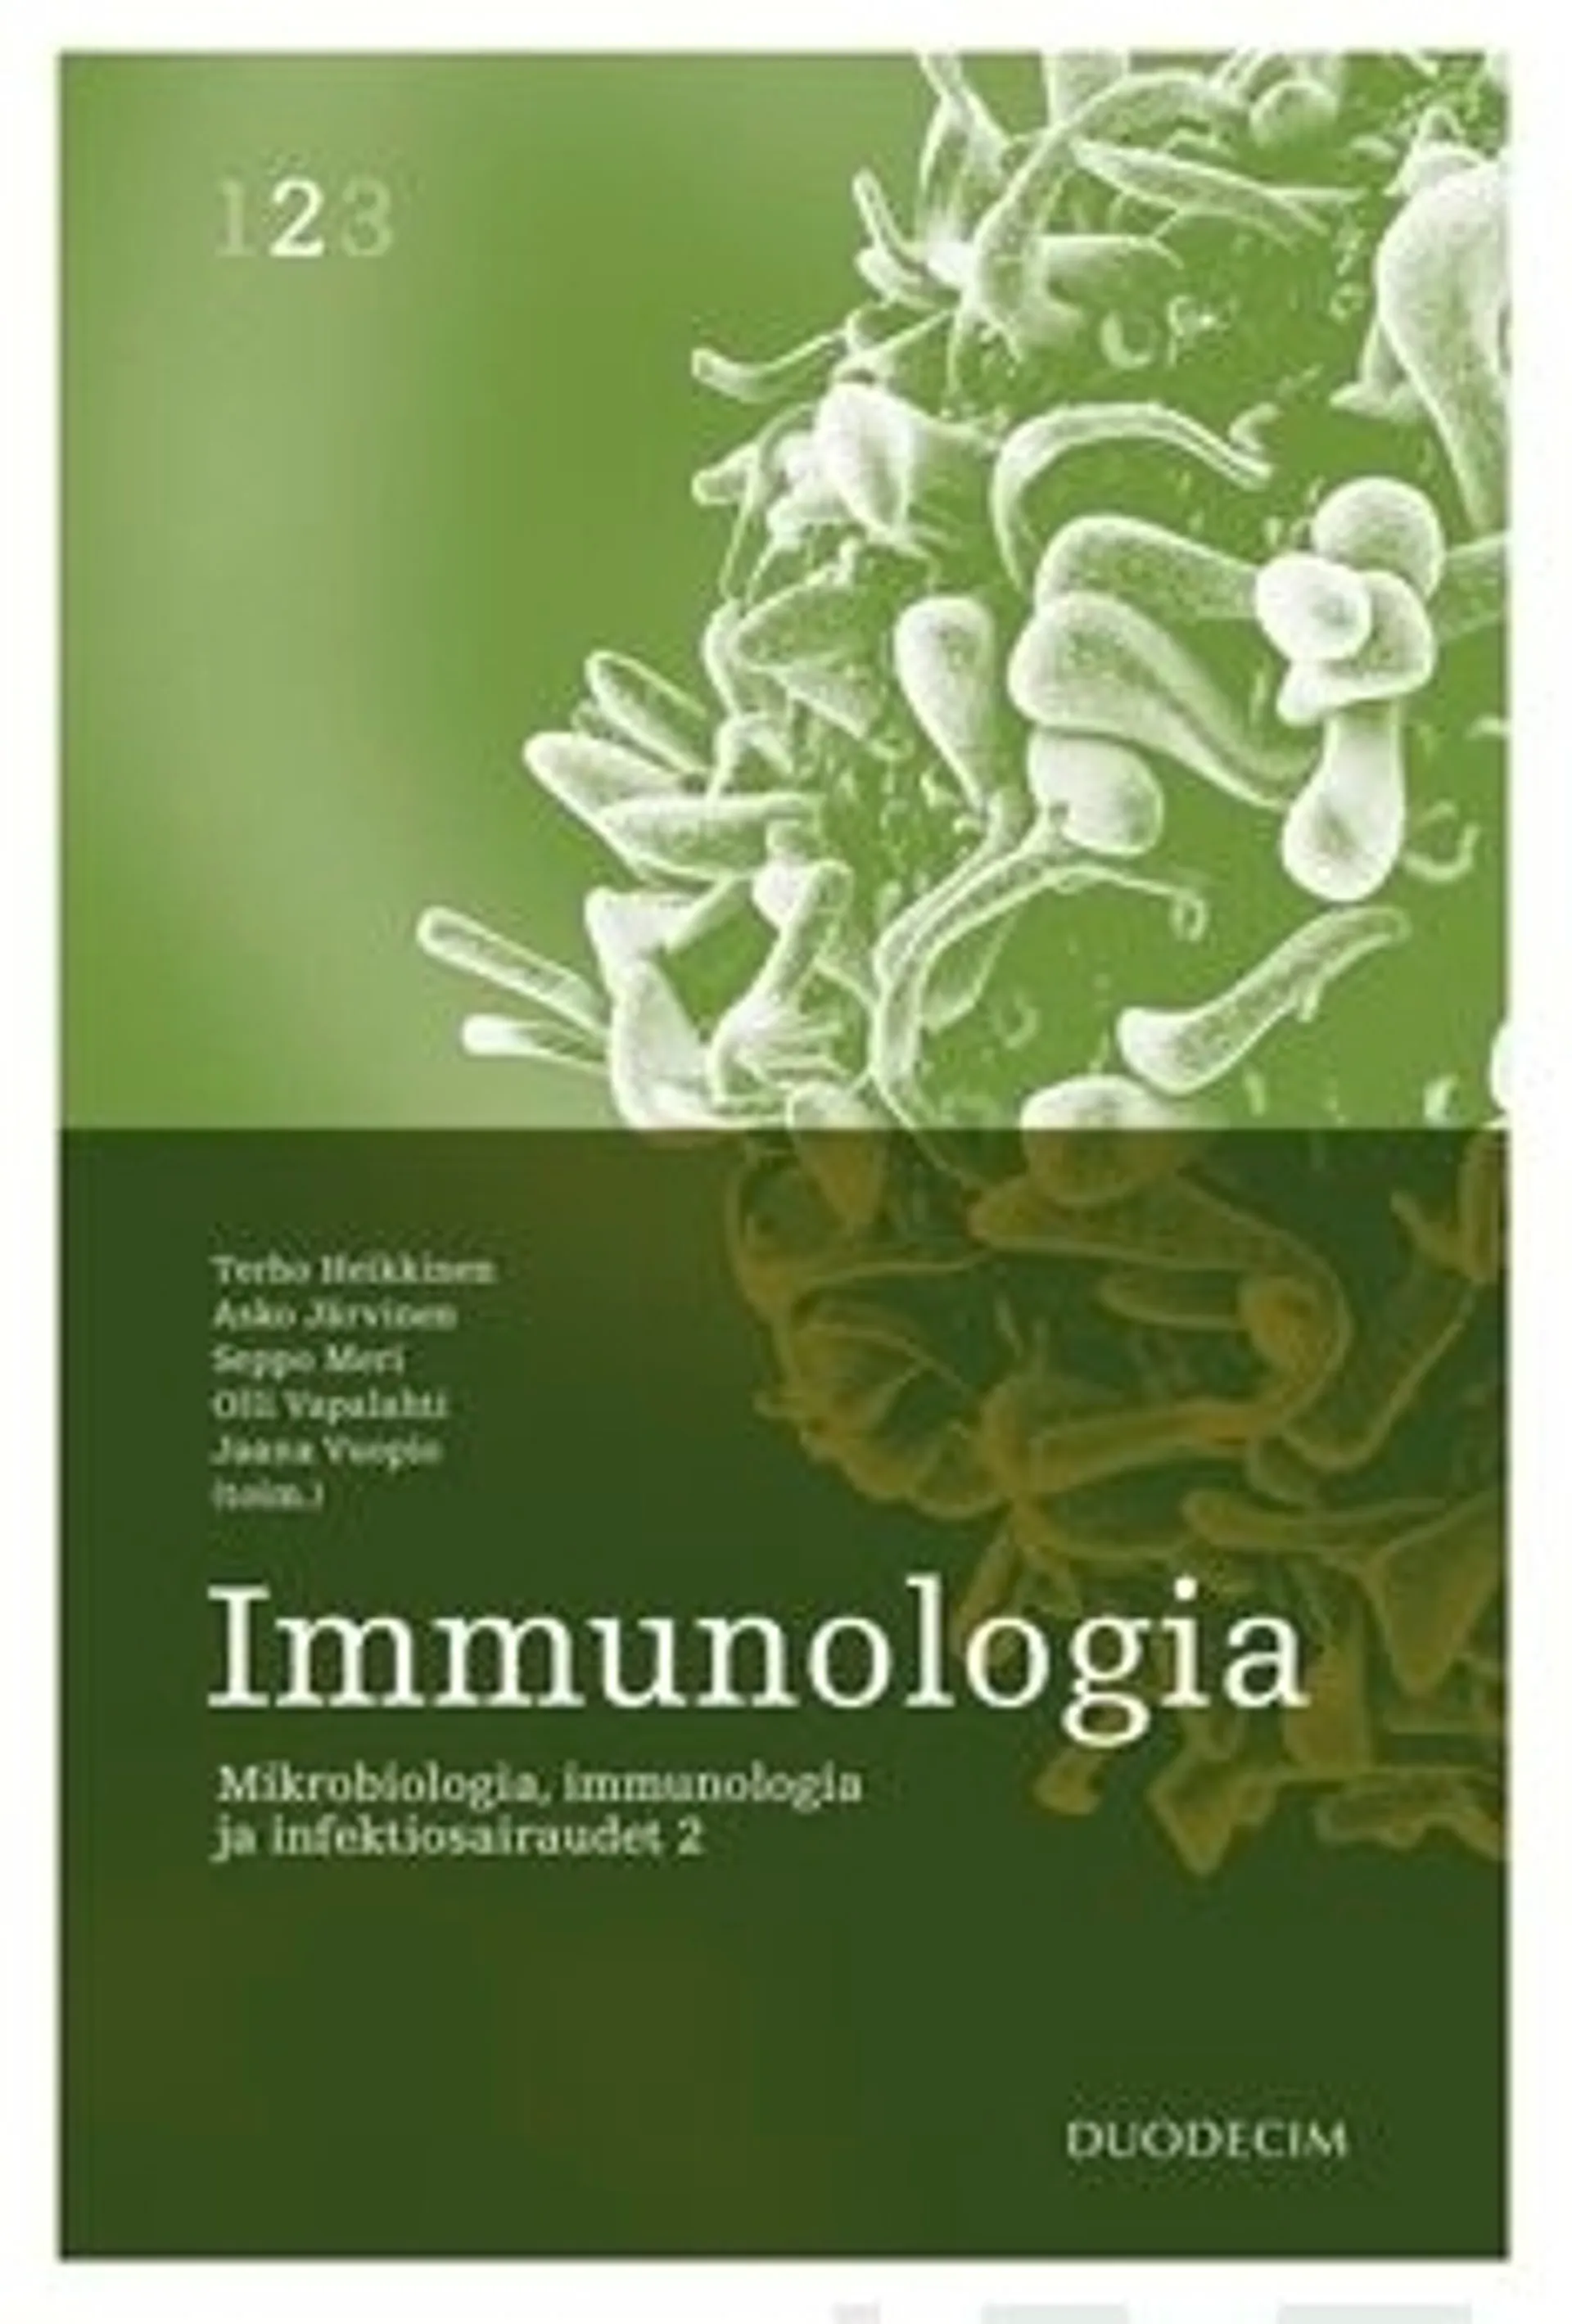 Immunologia - Mikrobiologia, immunologia ja infektiosairaudet, kirja 2